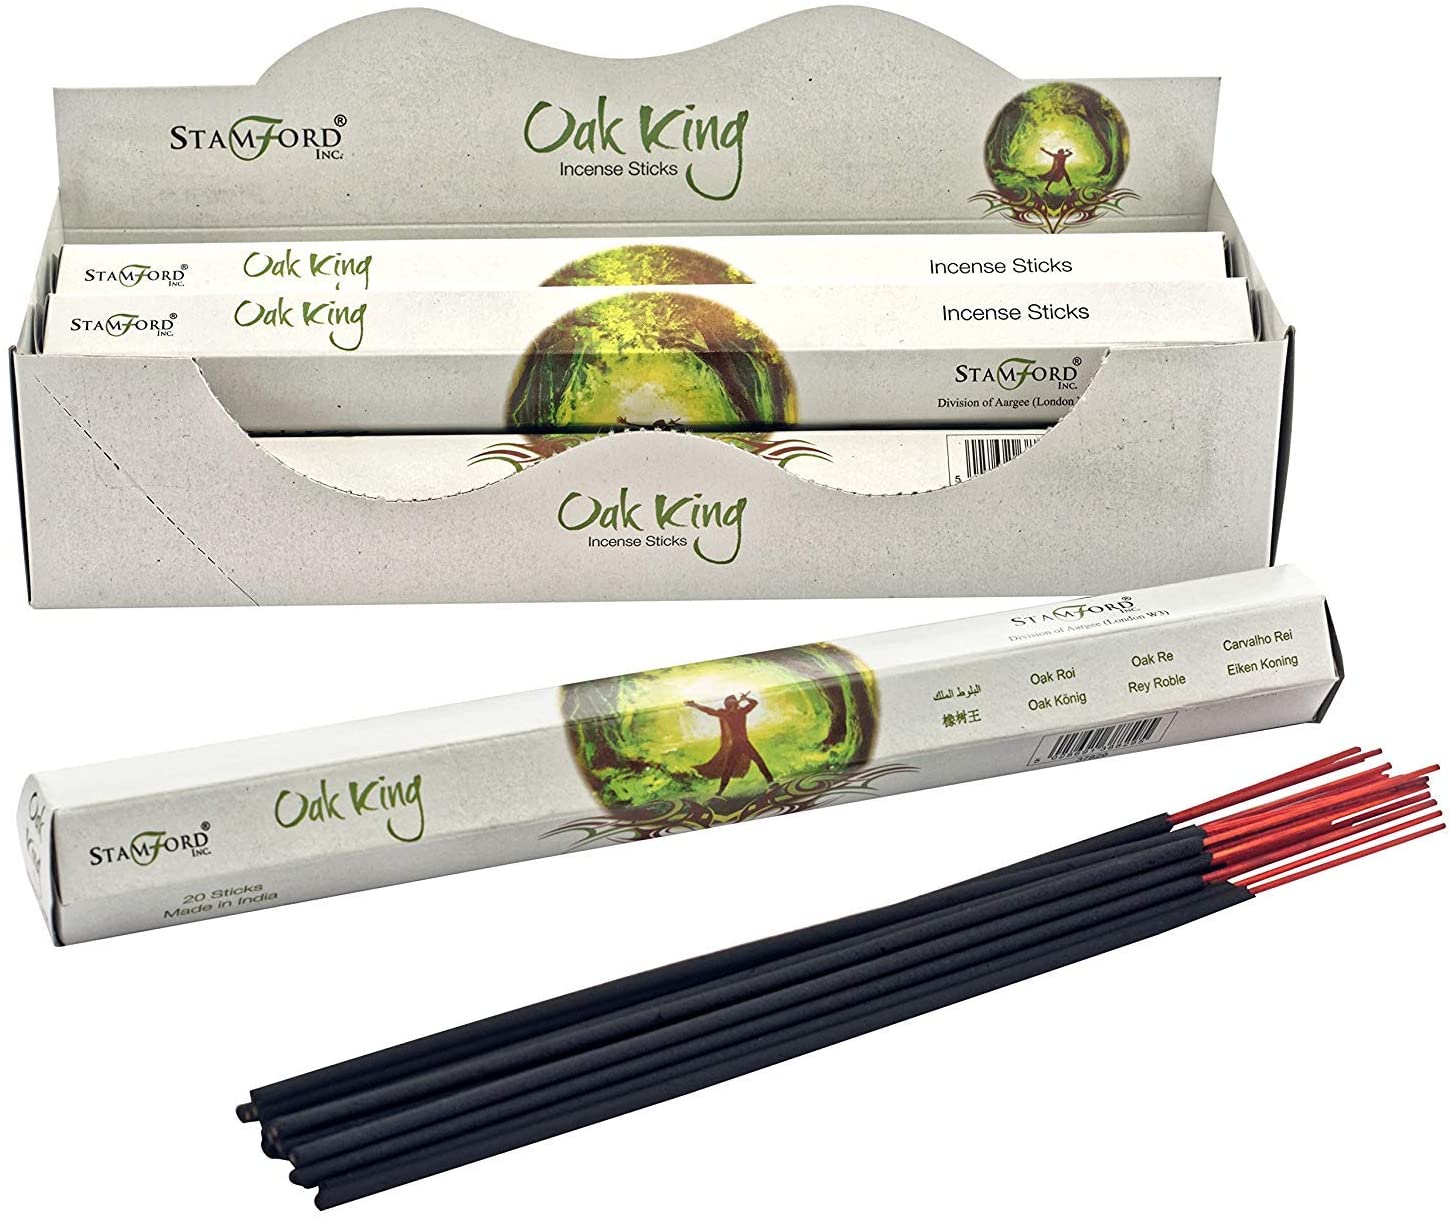 Stamford Oak King Incense Sticks